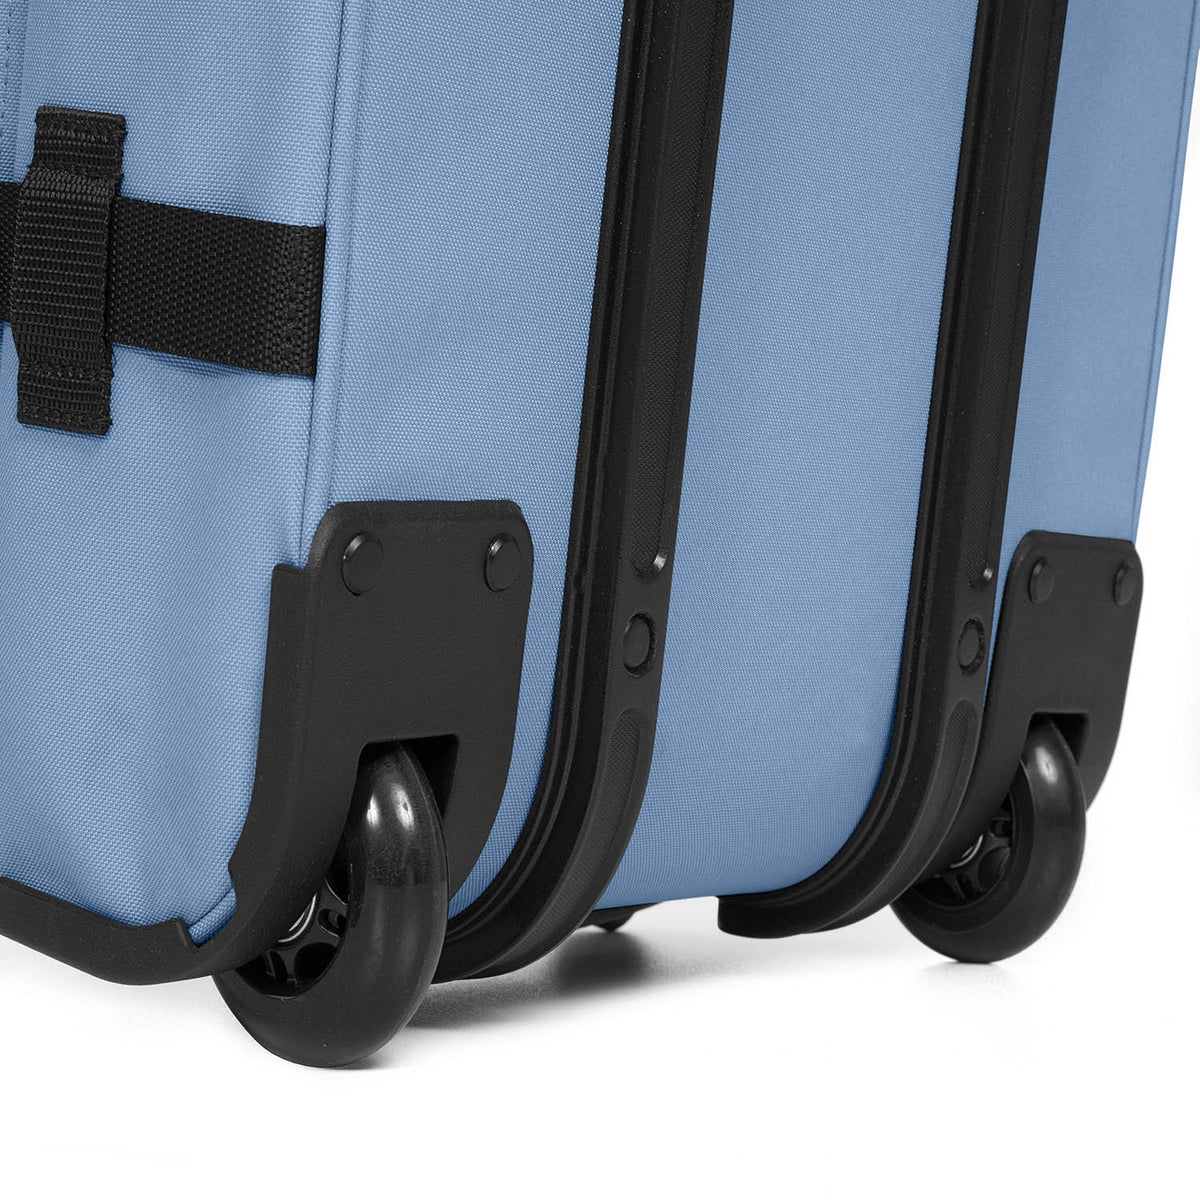 Eastpak Transit'R S Suitcase - Charming Blue